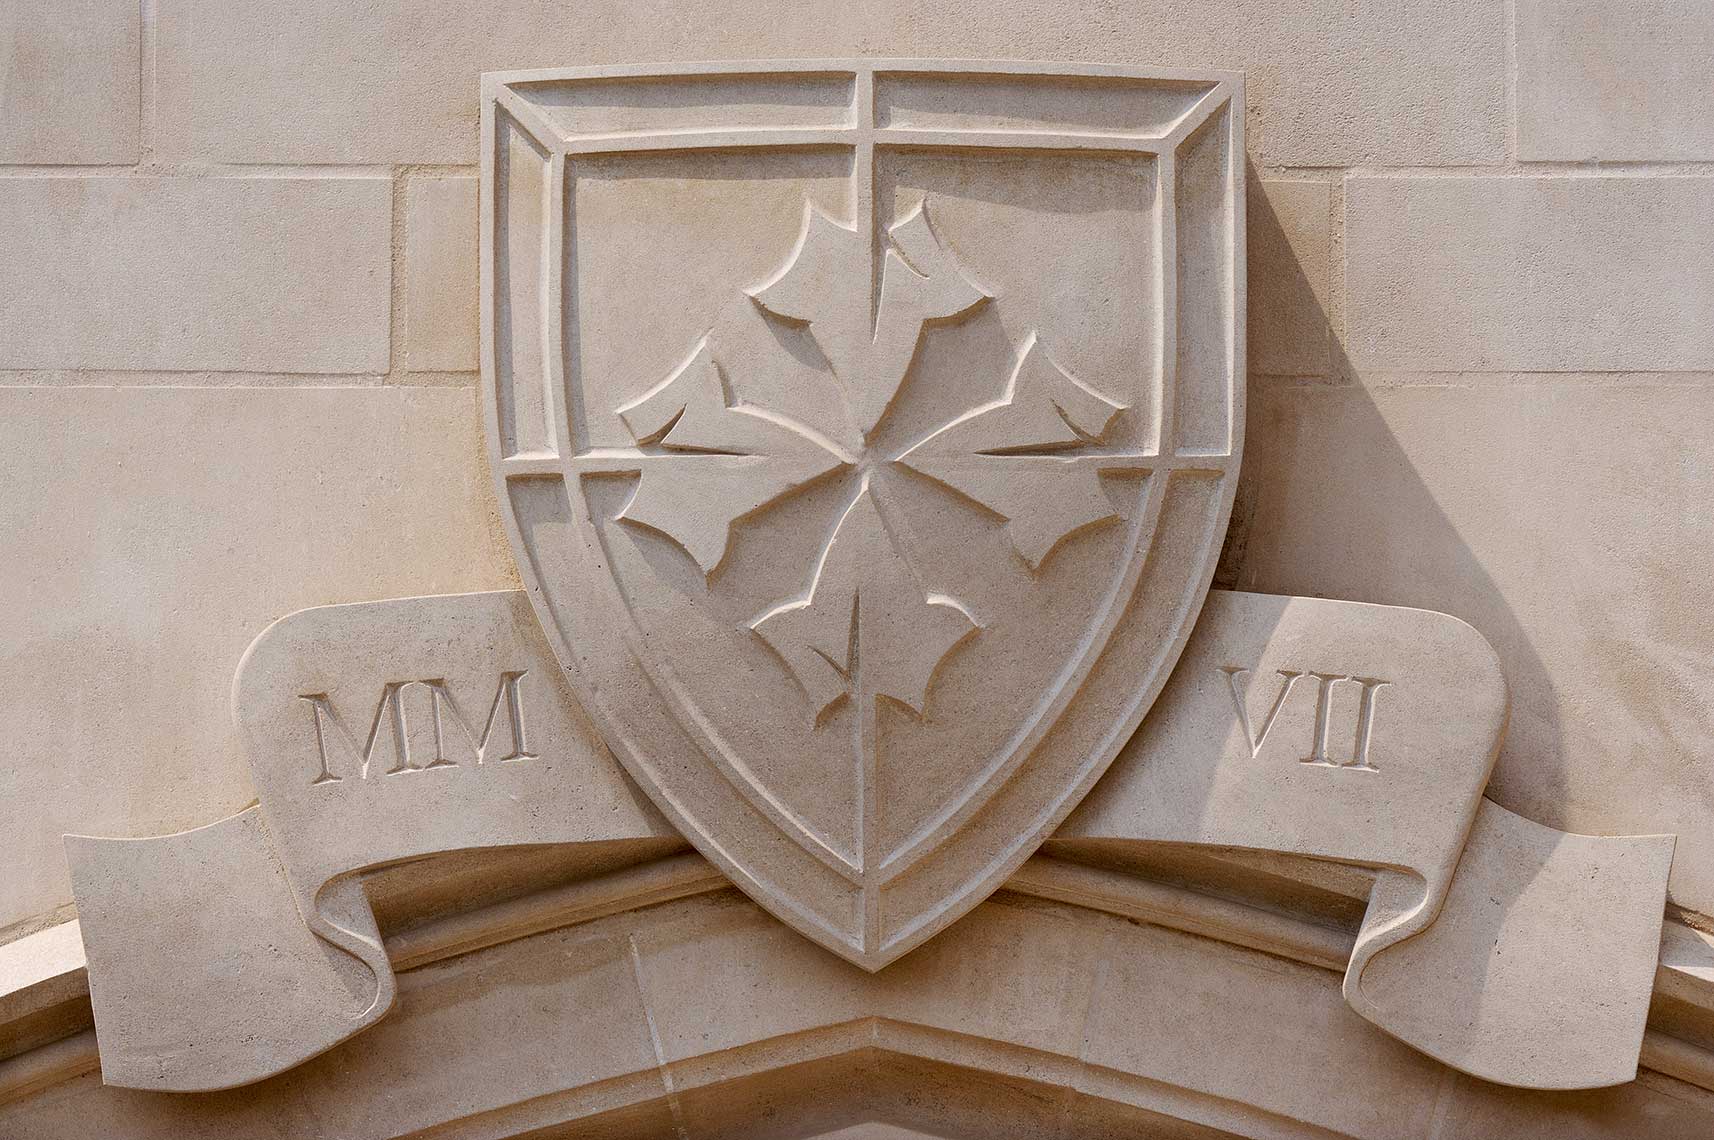 Whitman College, Princeton University - College Crest